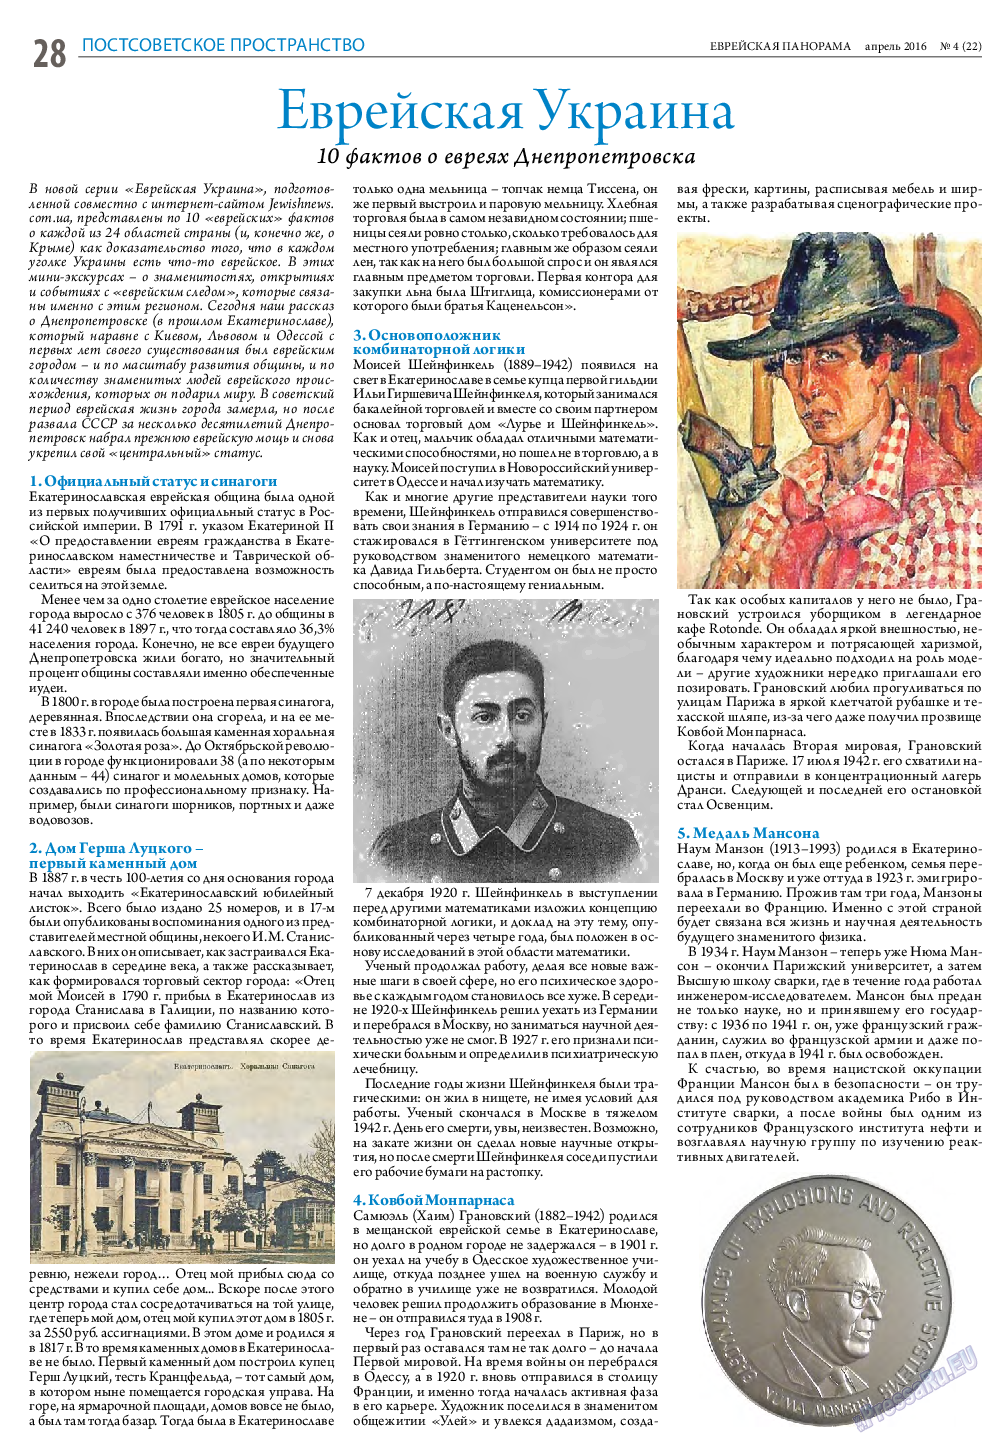 Еврейская панорама, газета. 2016 №4 стр.28